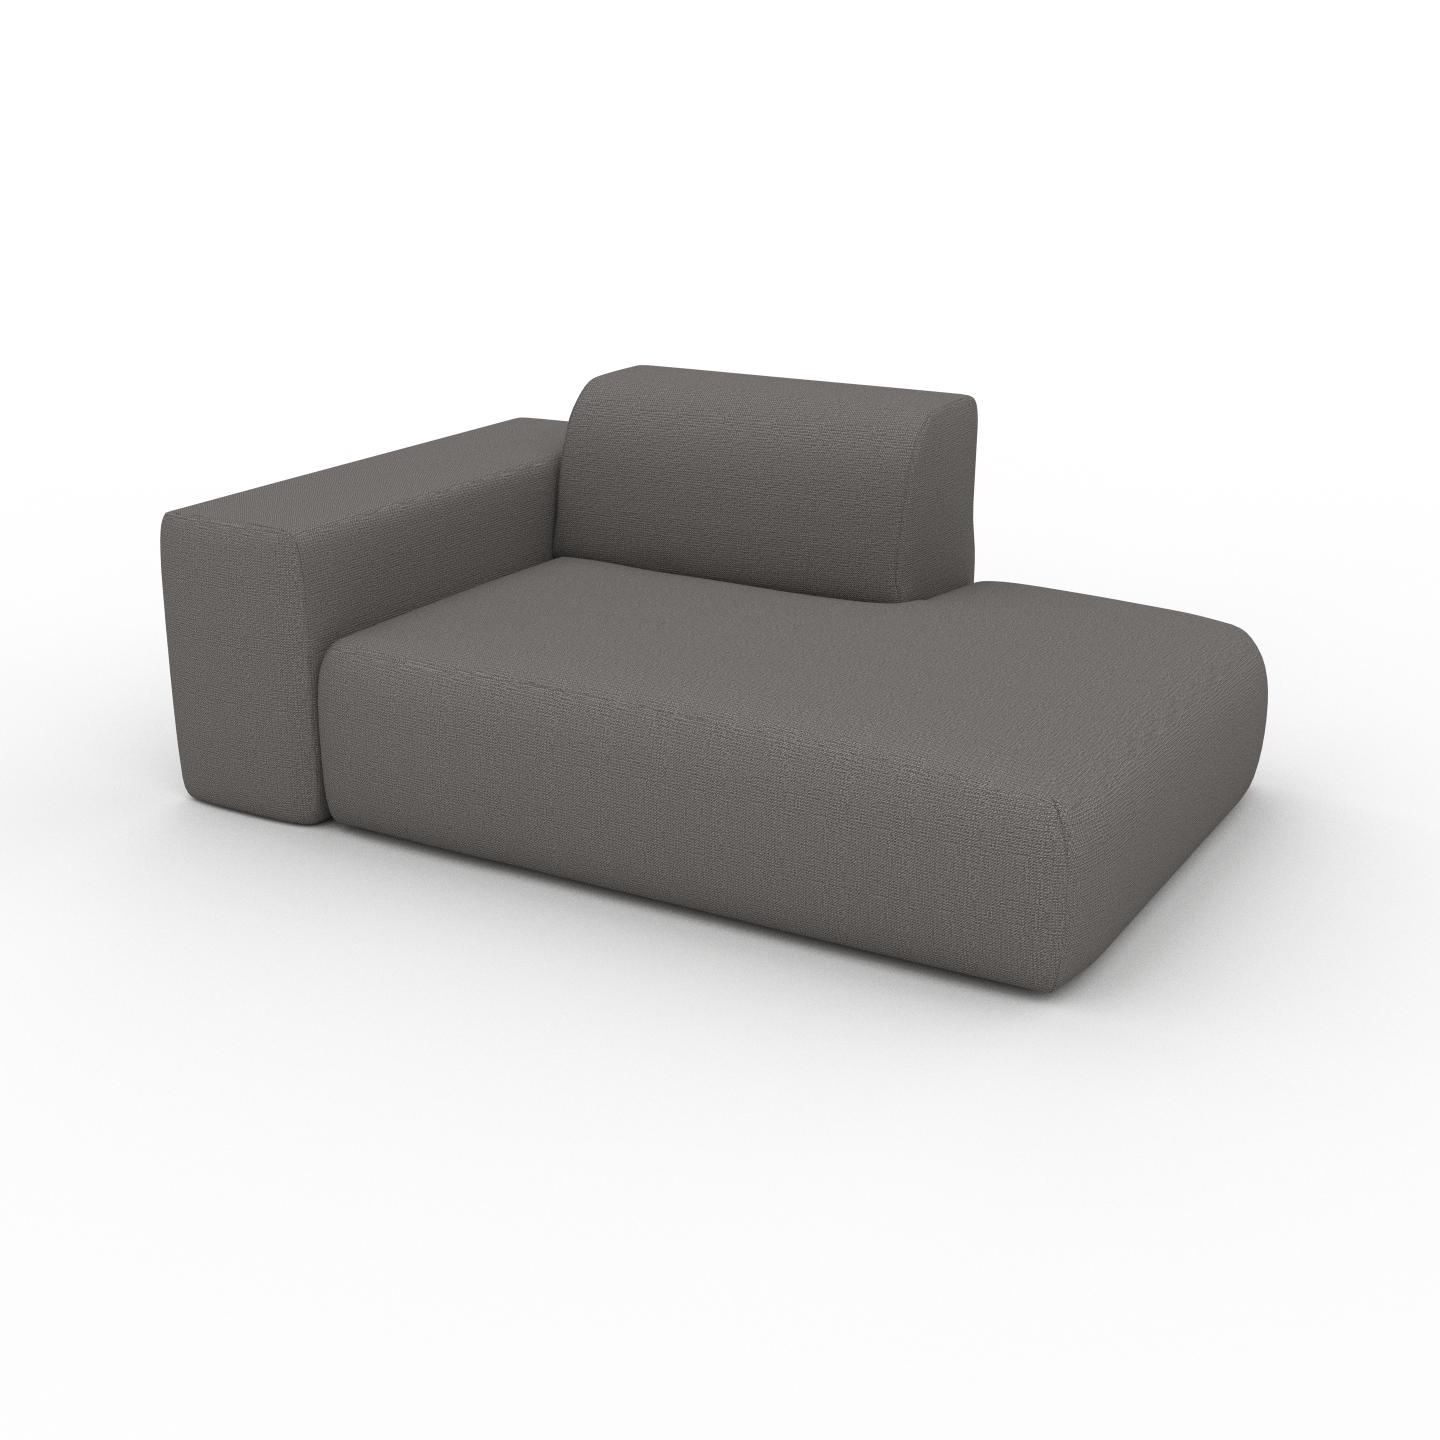 MYCS Sessel Taupegrau - Eleganter Sessel: Hochwertige Qualität, einzigartiges Design - 168 x 72 x 107 cm, Individuell konfigurierbar